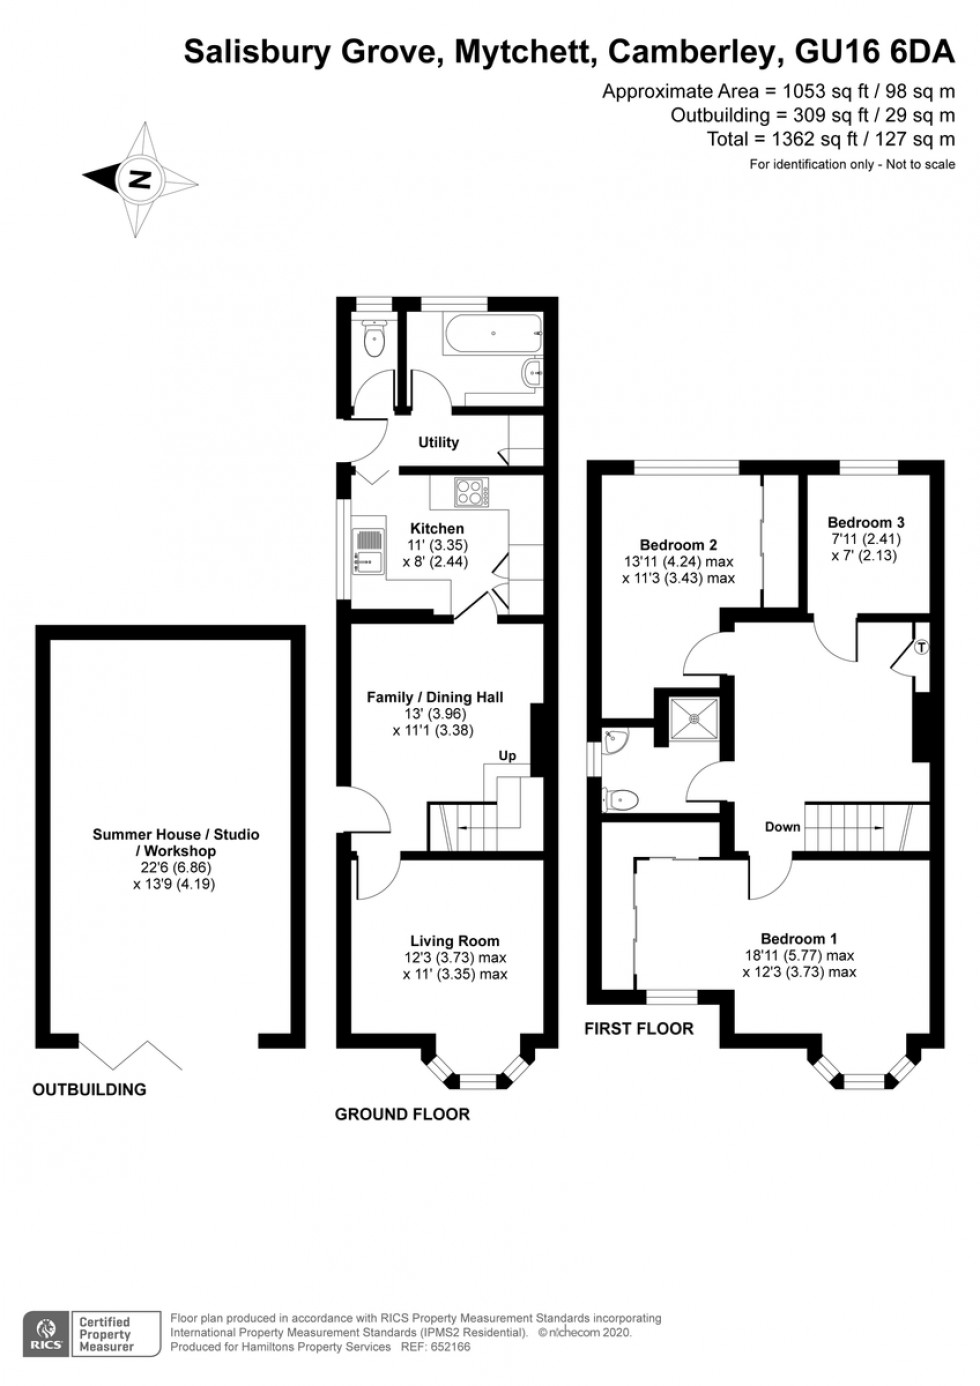 Floorplan for Salisbury Grove, Mytchett